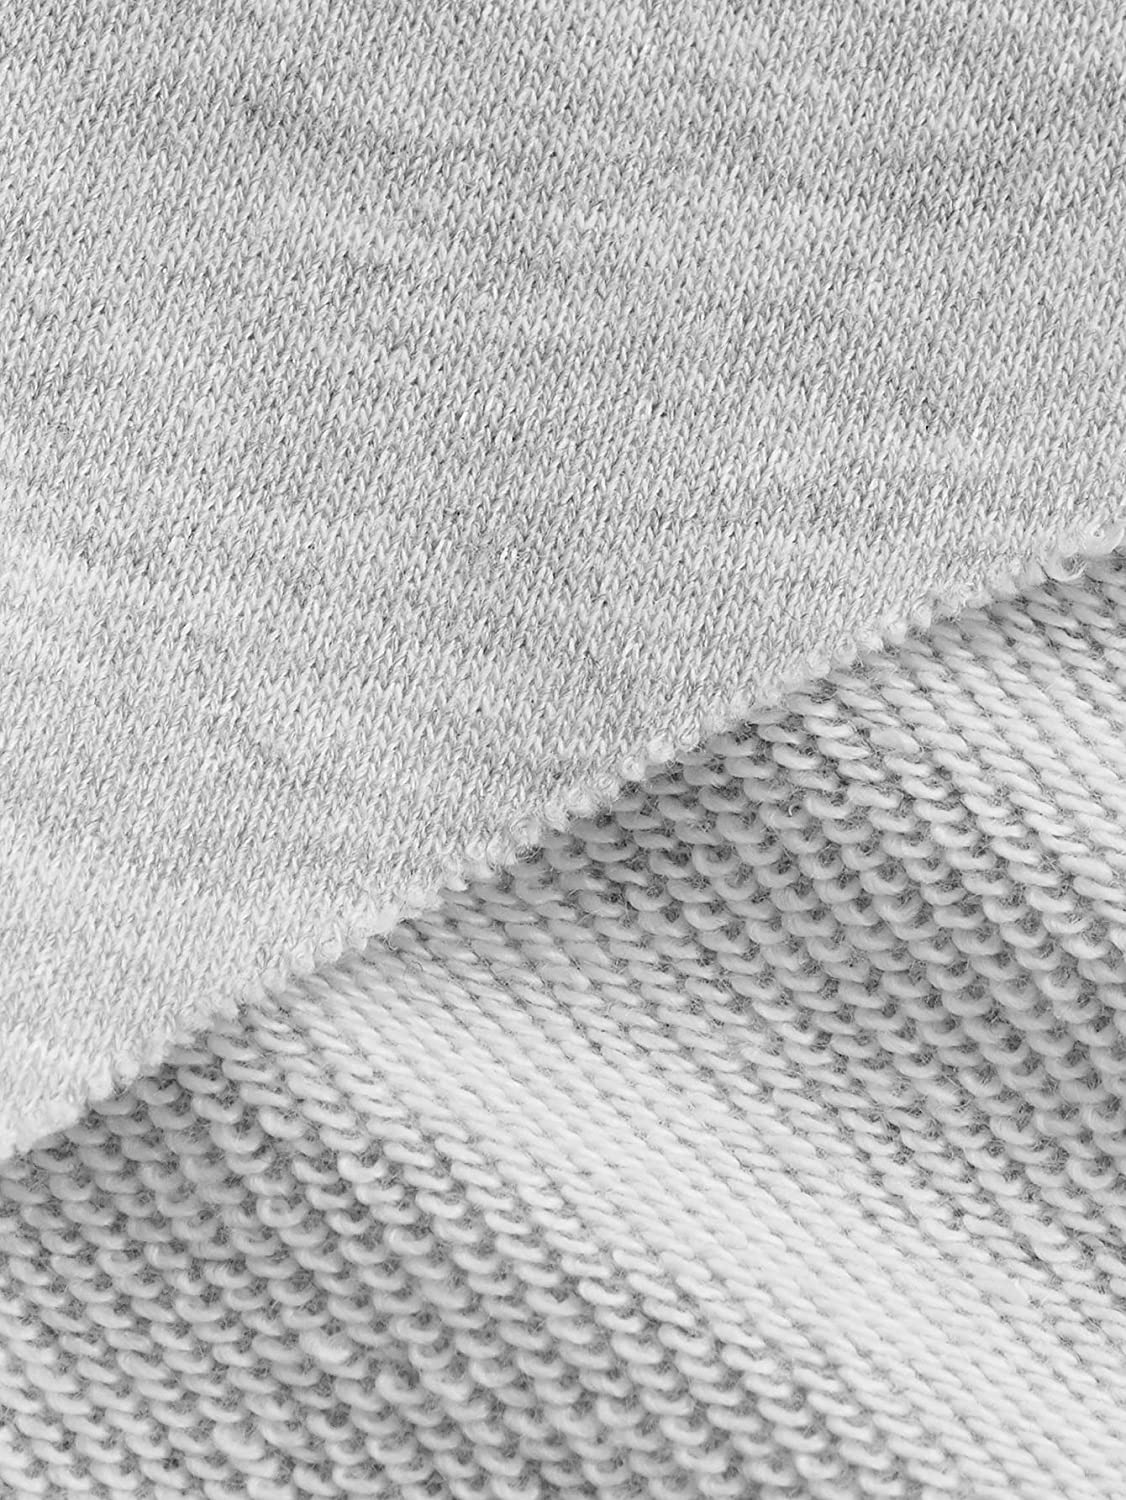 SweatyRocks Women's Casual Solid Cut Out Front Long Sleeve Pullover Crop Top Sweatshirt